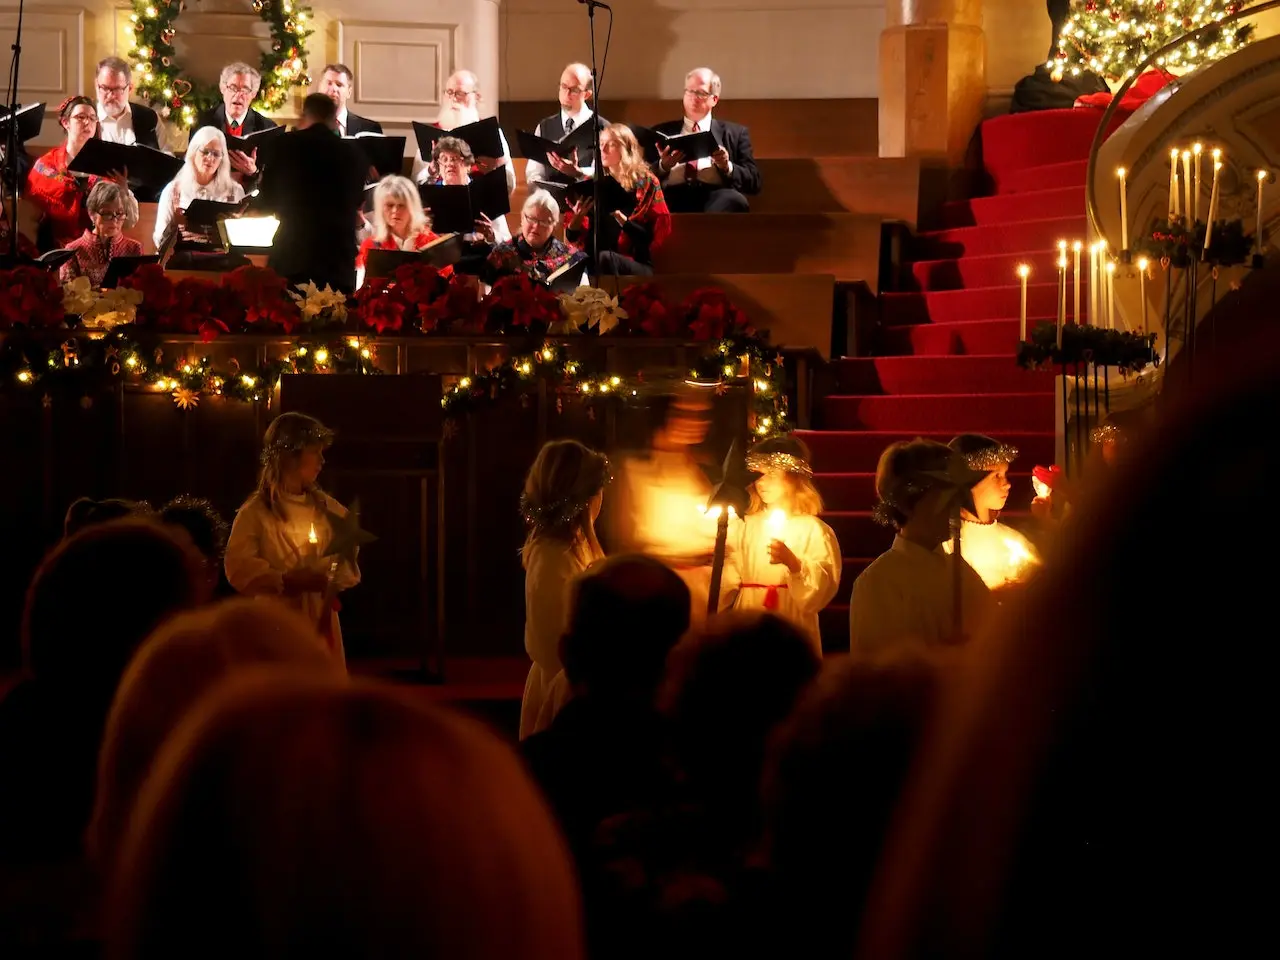 Captivating Choir Performances to Mesmerize Your Event